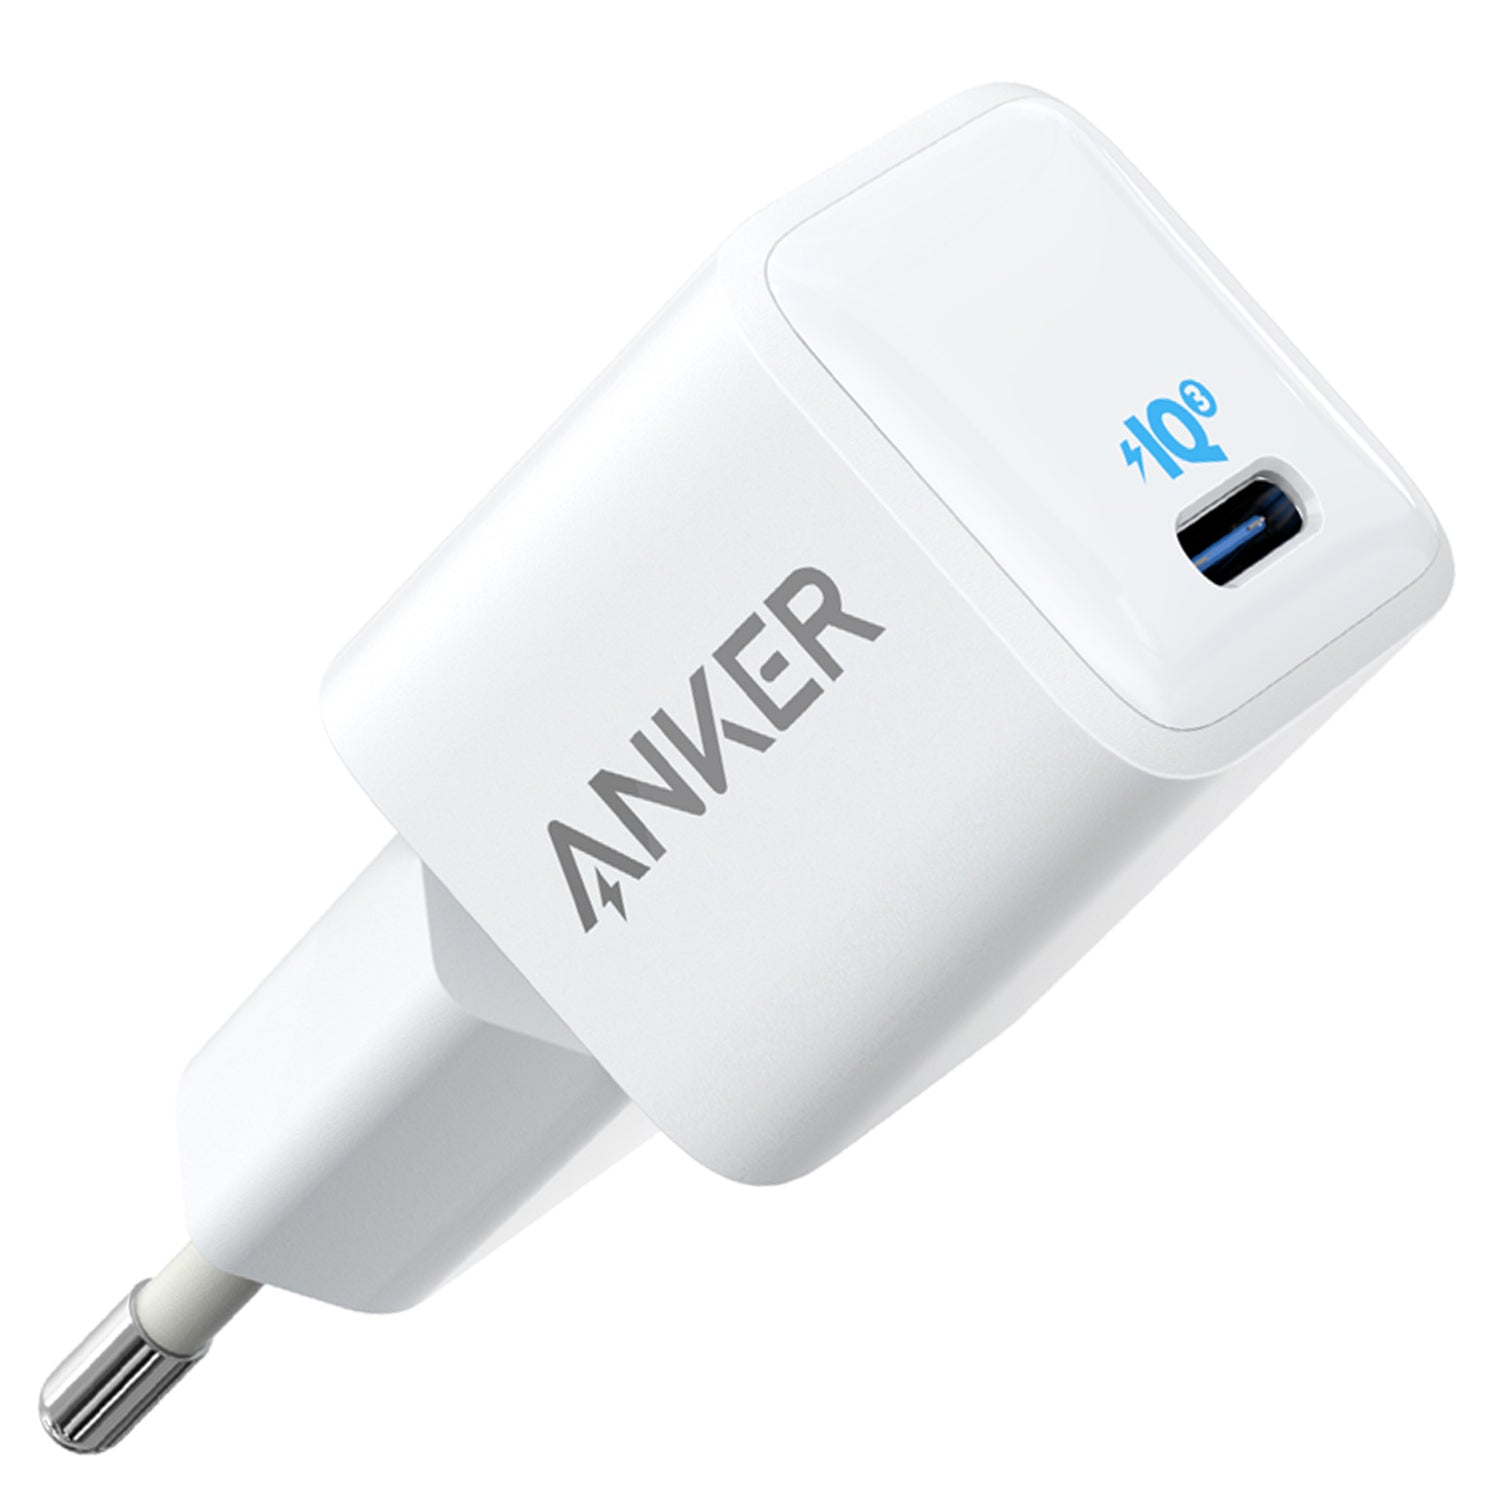 Anker PowerPort III Nano 20W USB-C Power Adapter - Apple iPhone Compatible